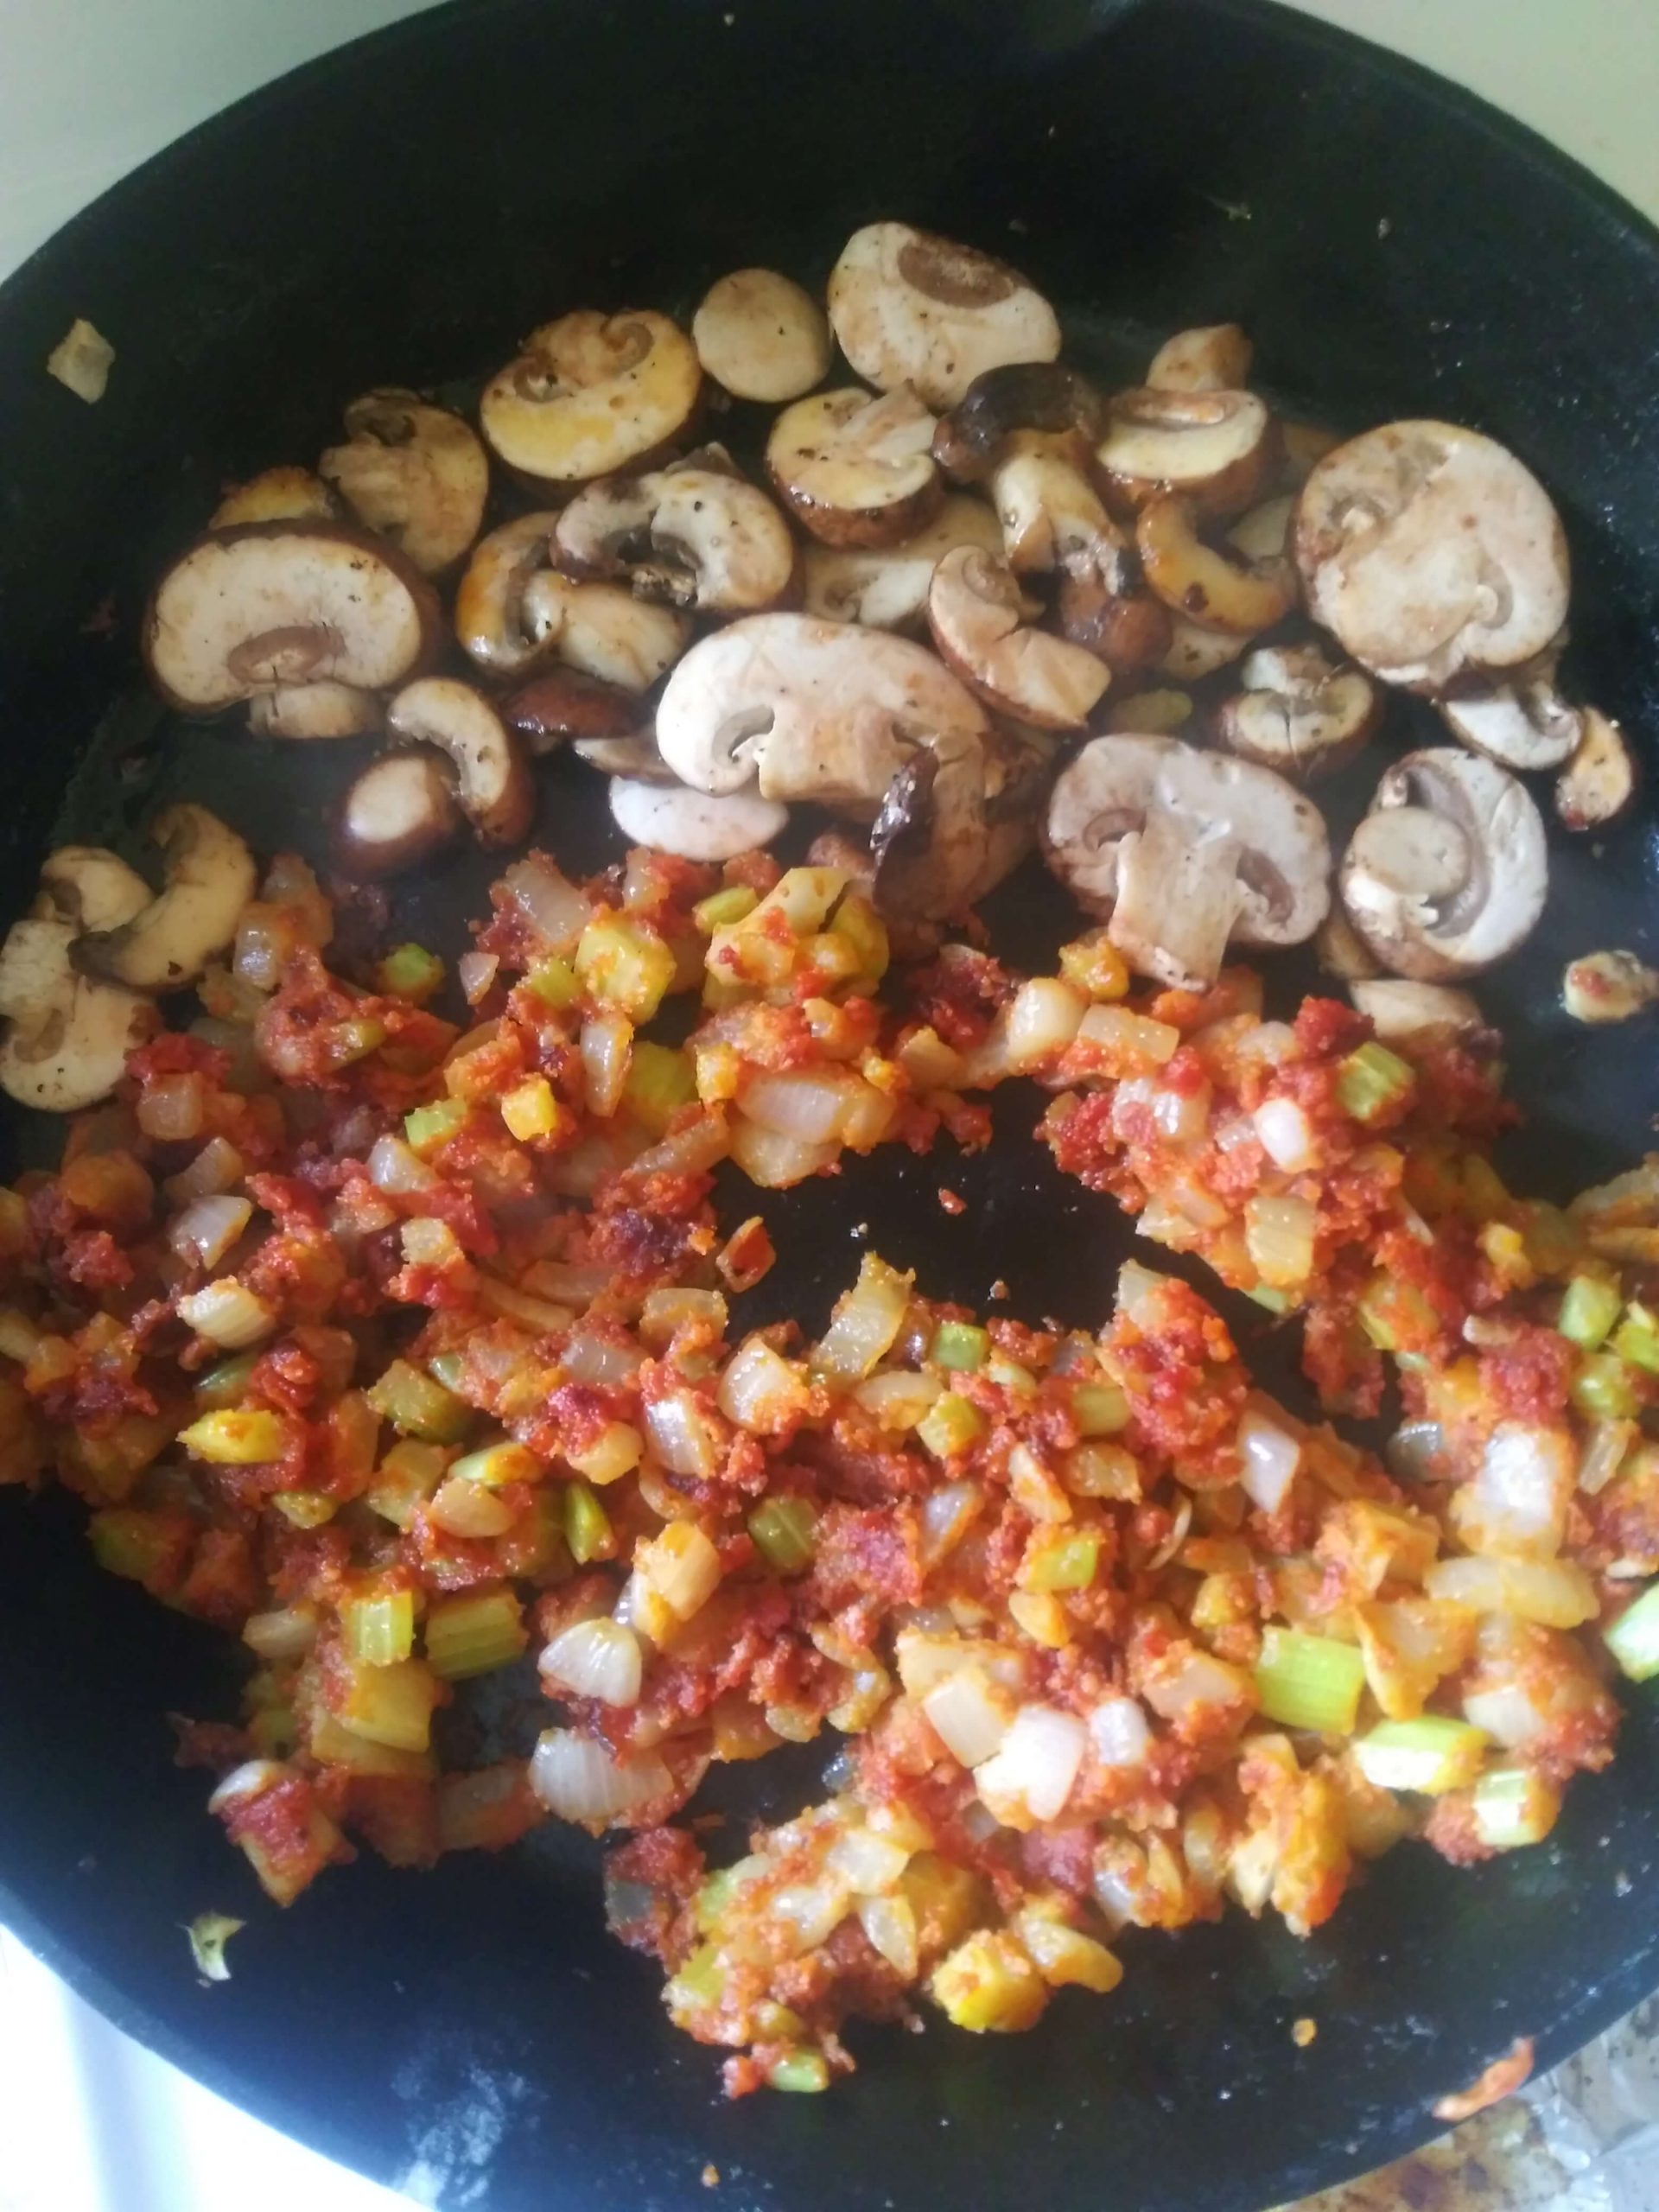 mushrooms and veggies in cast iron skillet